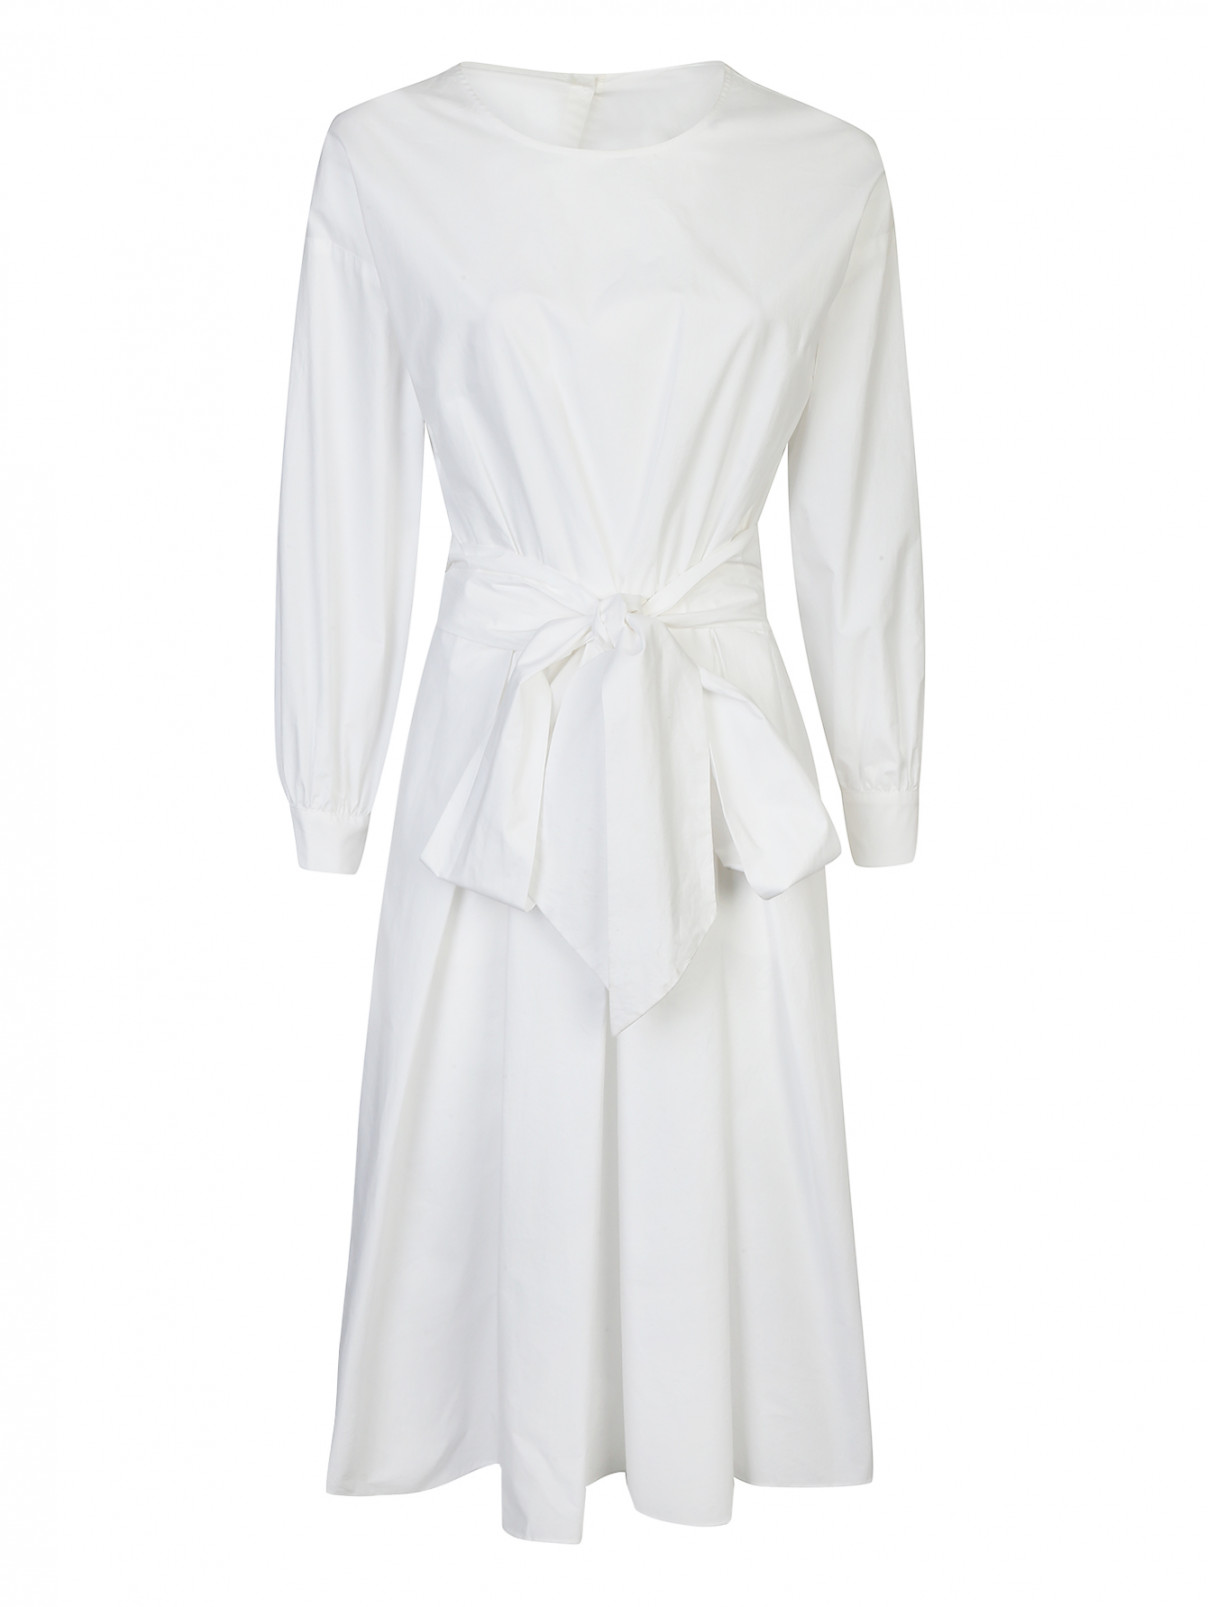 Платье-миди из хлопка Moschino Boutique  –  Общий вид  – Цвет:  Белый